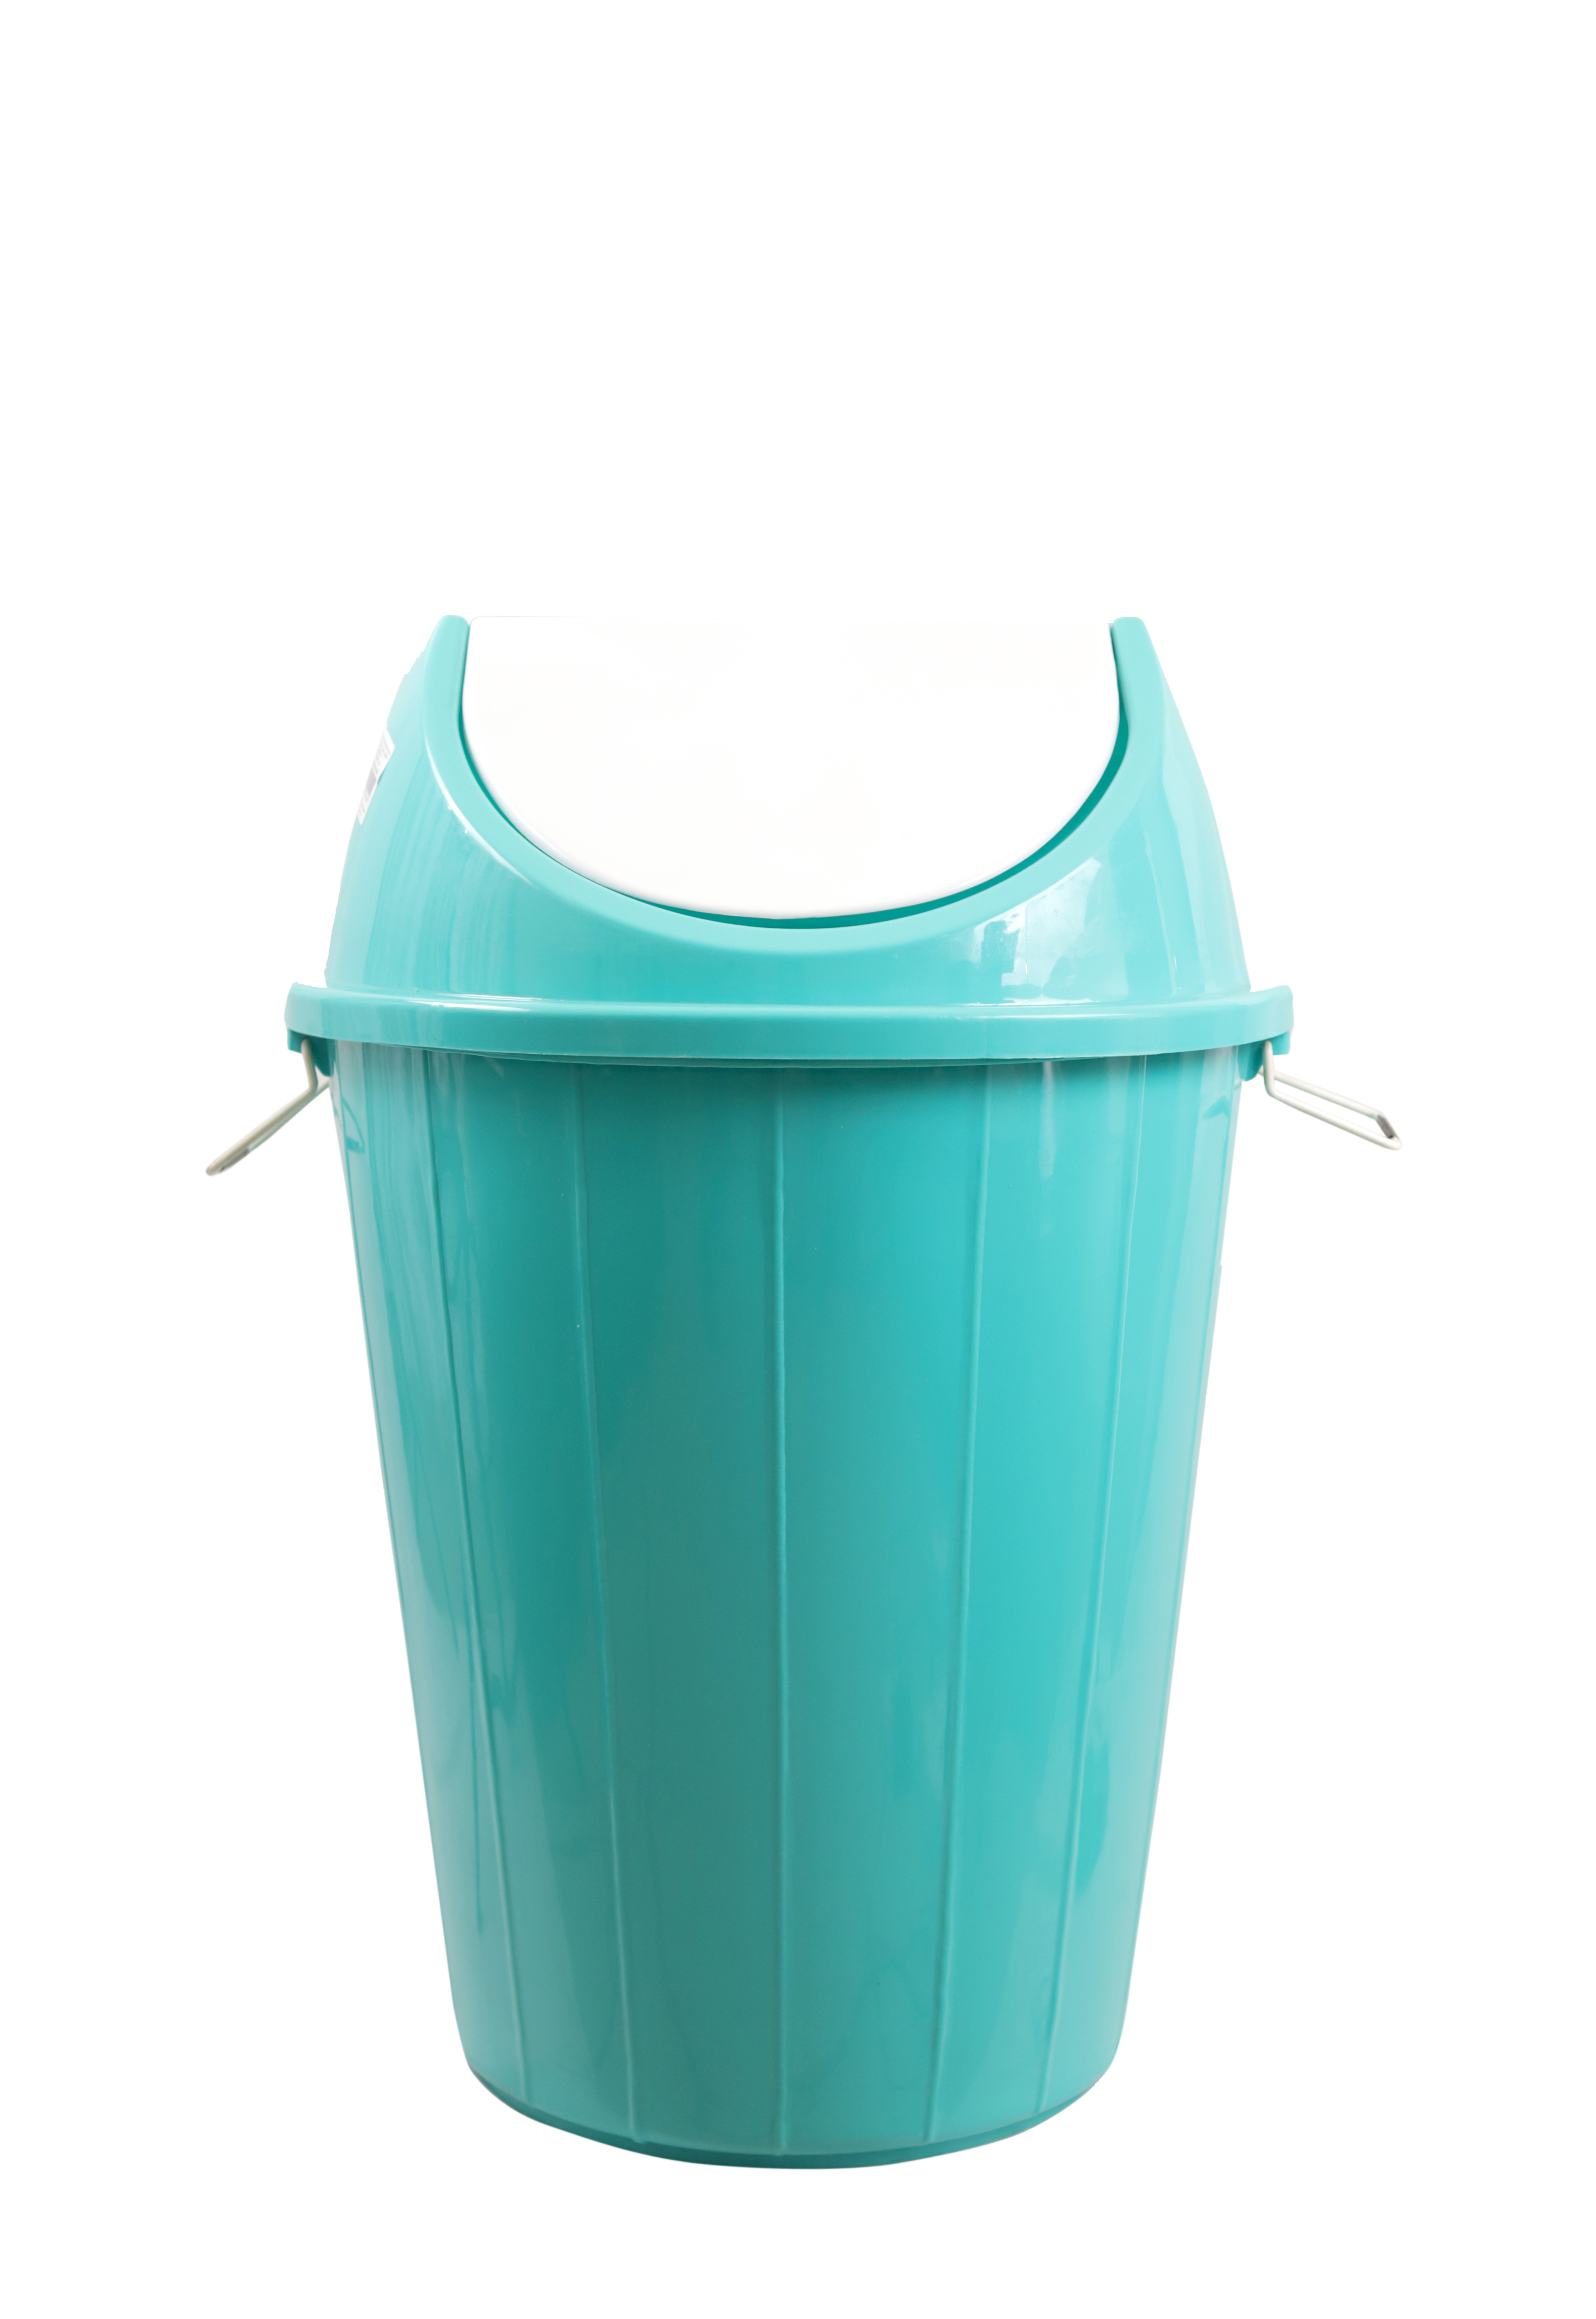 Plastic Dustbin 60 liter